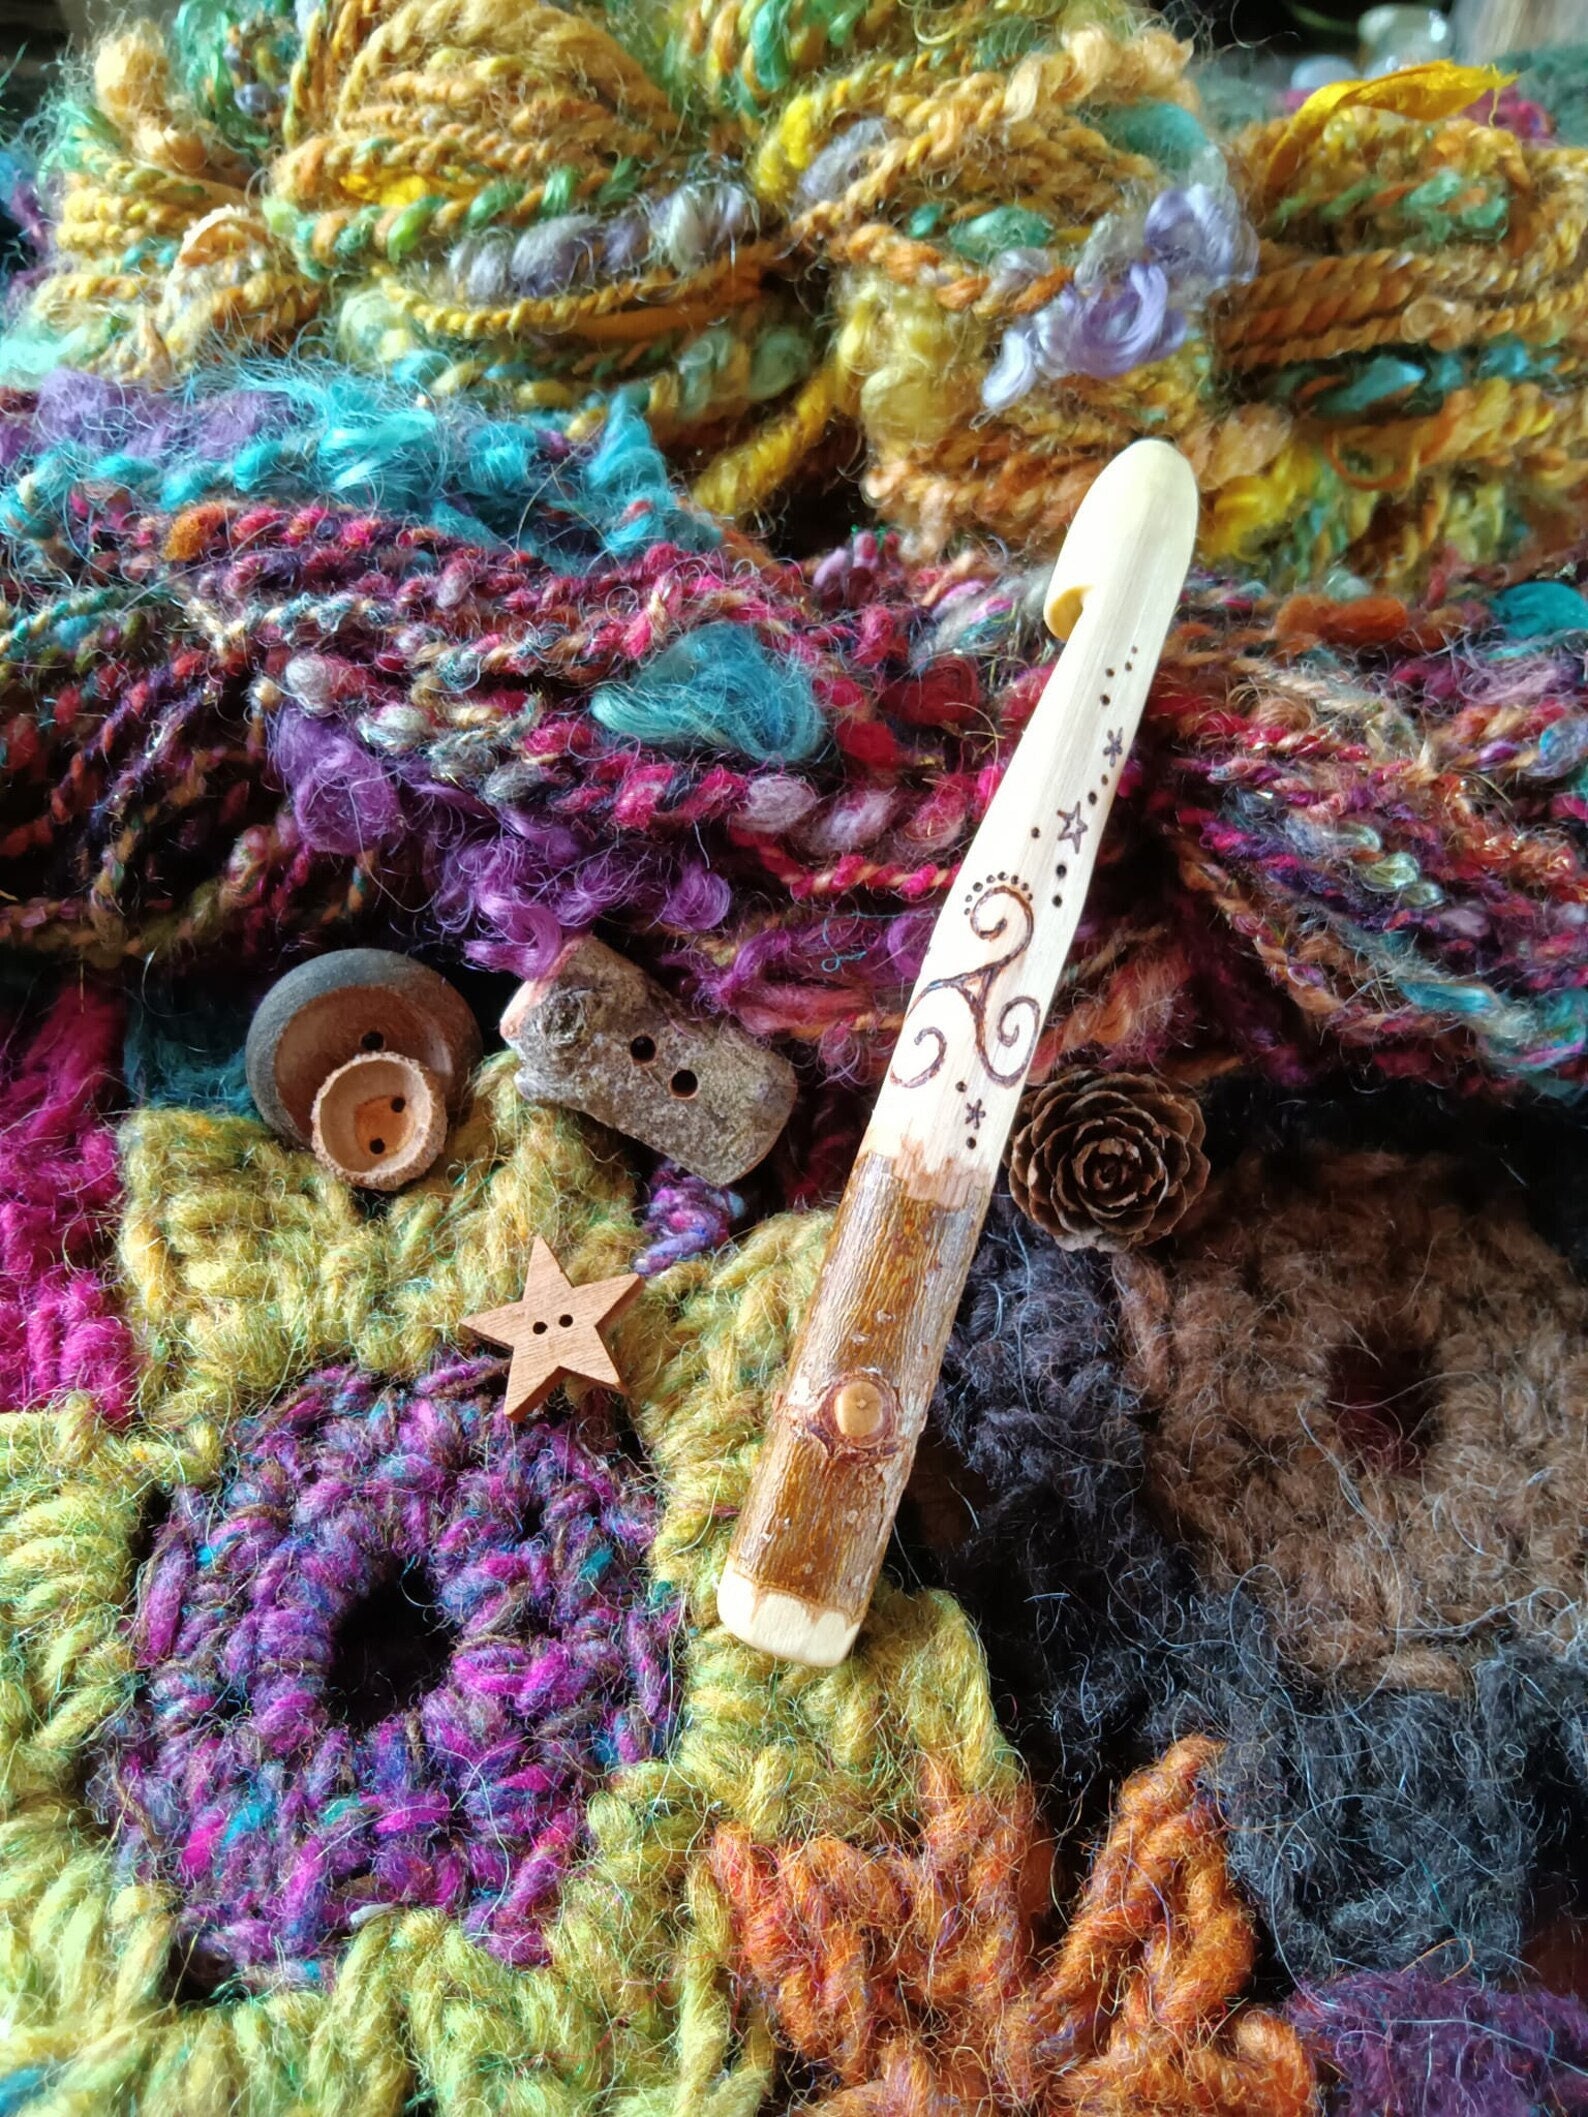 Ergonomic Crochet Hook.2-10mm. 14 Sizes for Pick. Colorful